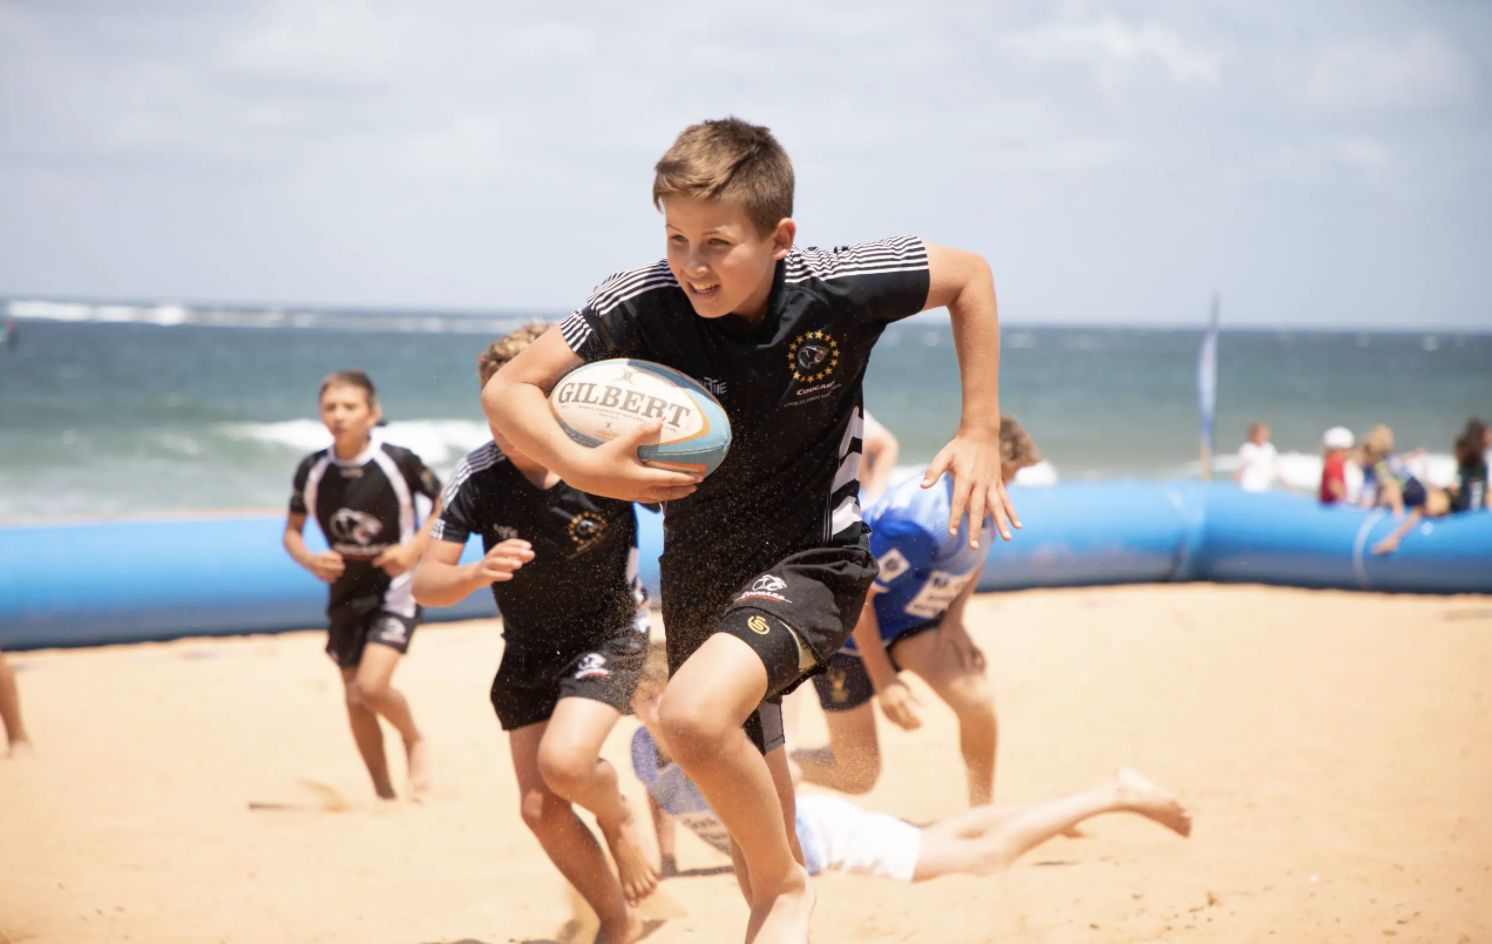 Rugby Fives @ Palm Beach, Palm Beach, New South Wales, Australia